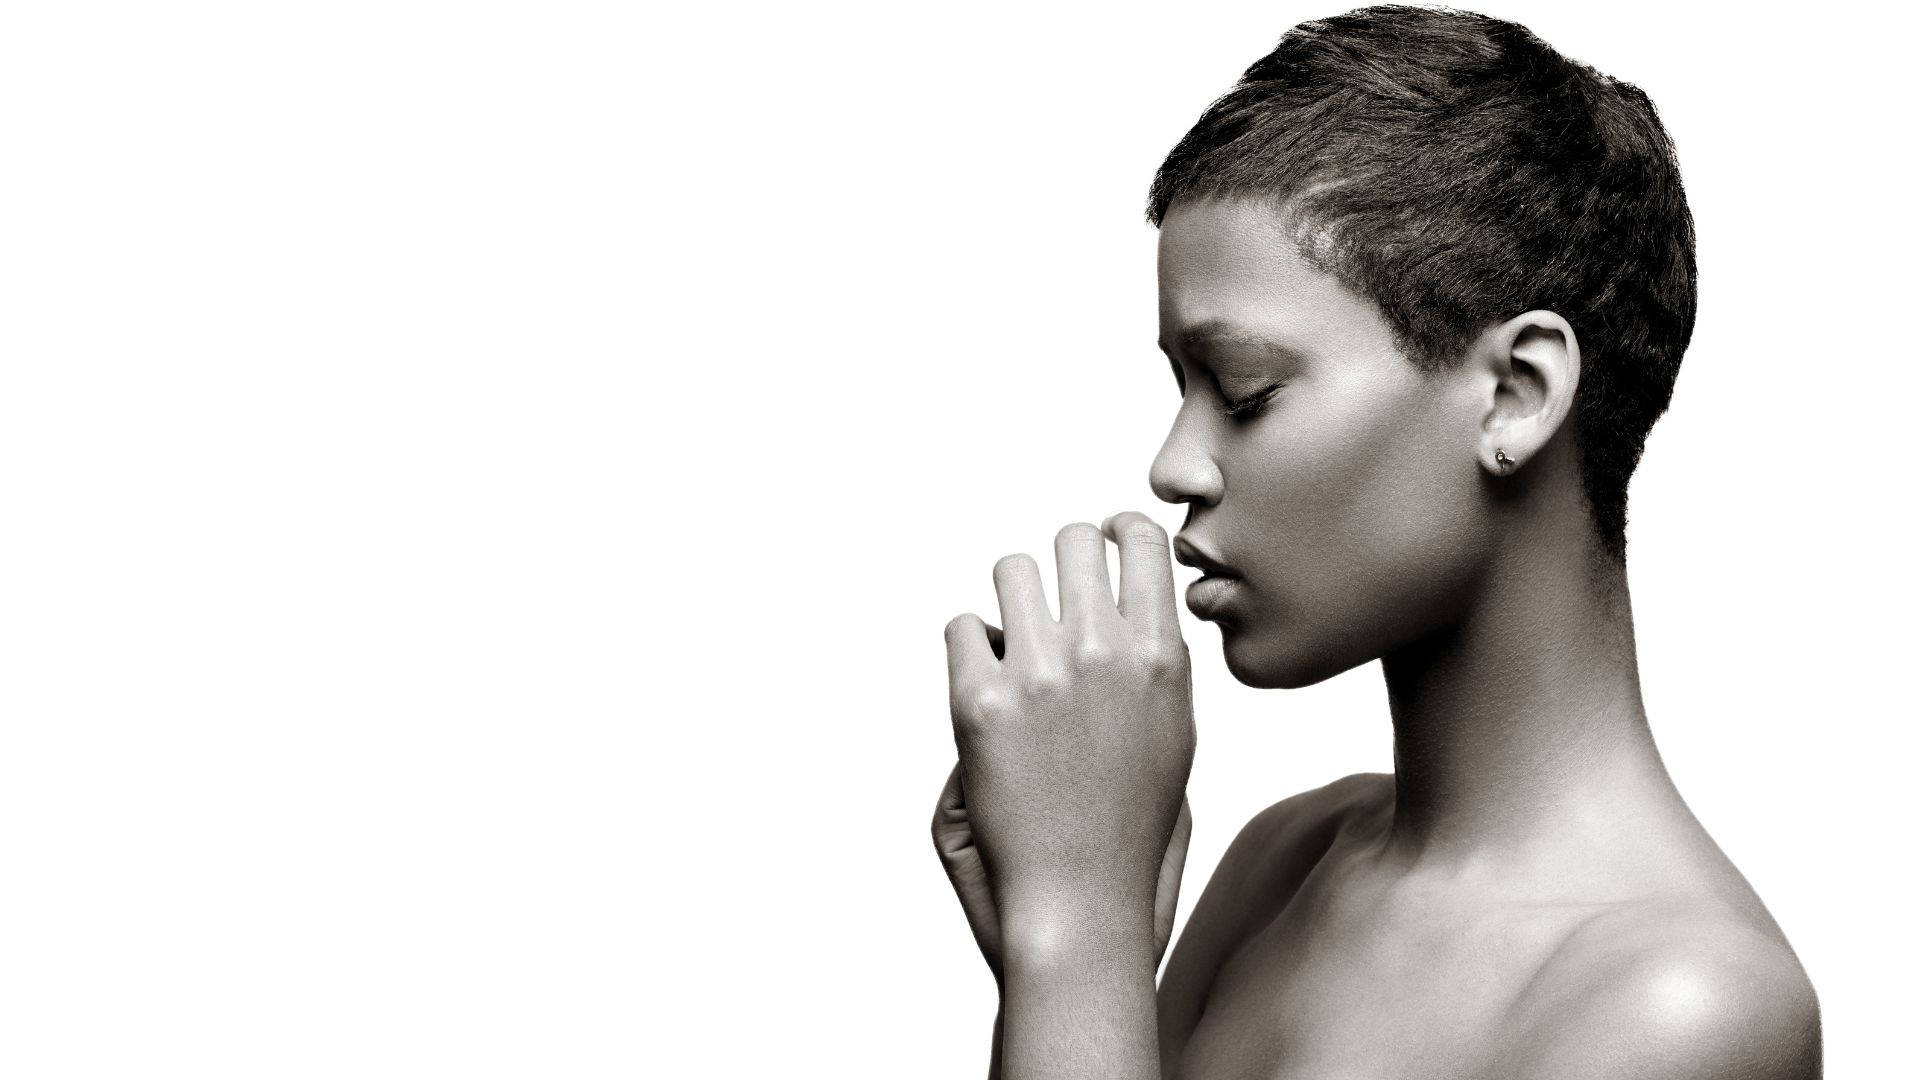 Donnaafricana Che Prega Silenziosamente Sfondo